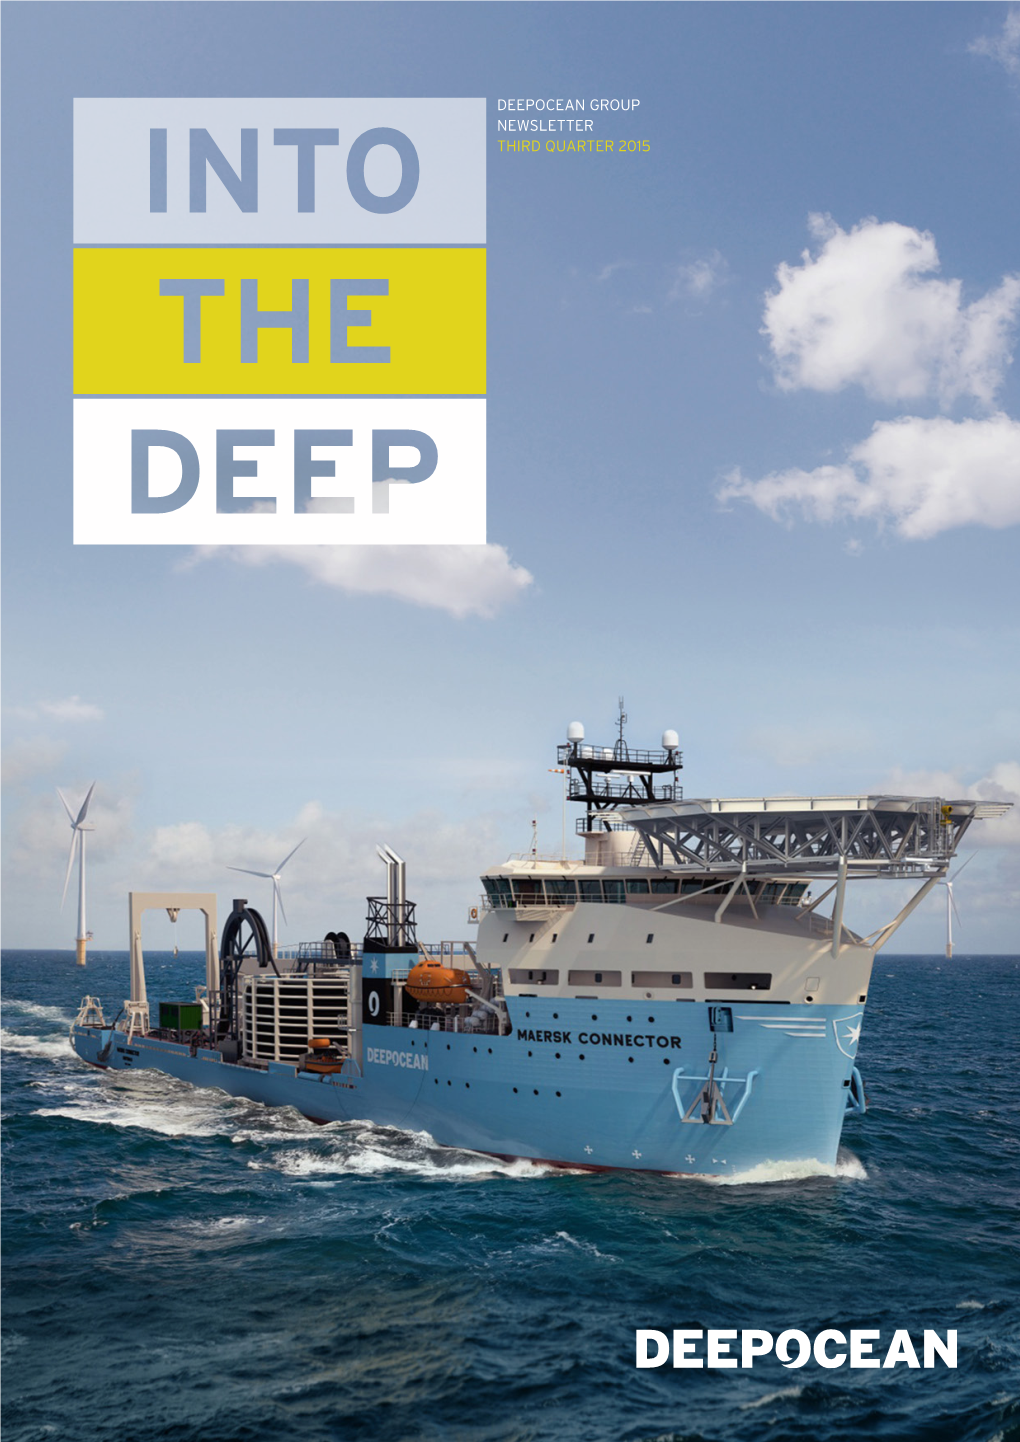 Deepocean Group Newsletter Third Quarter 2015 Into the Deep 2 Contents